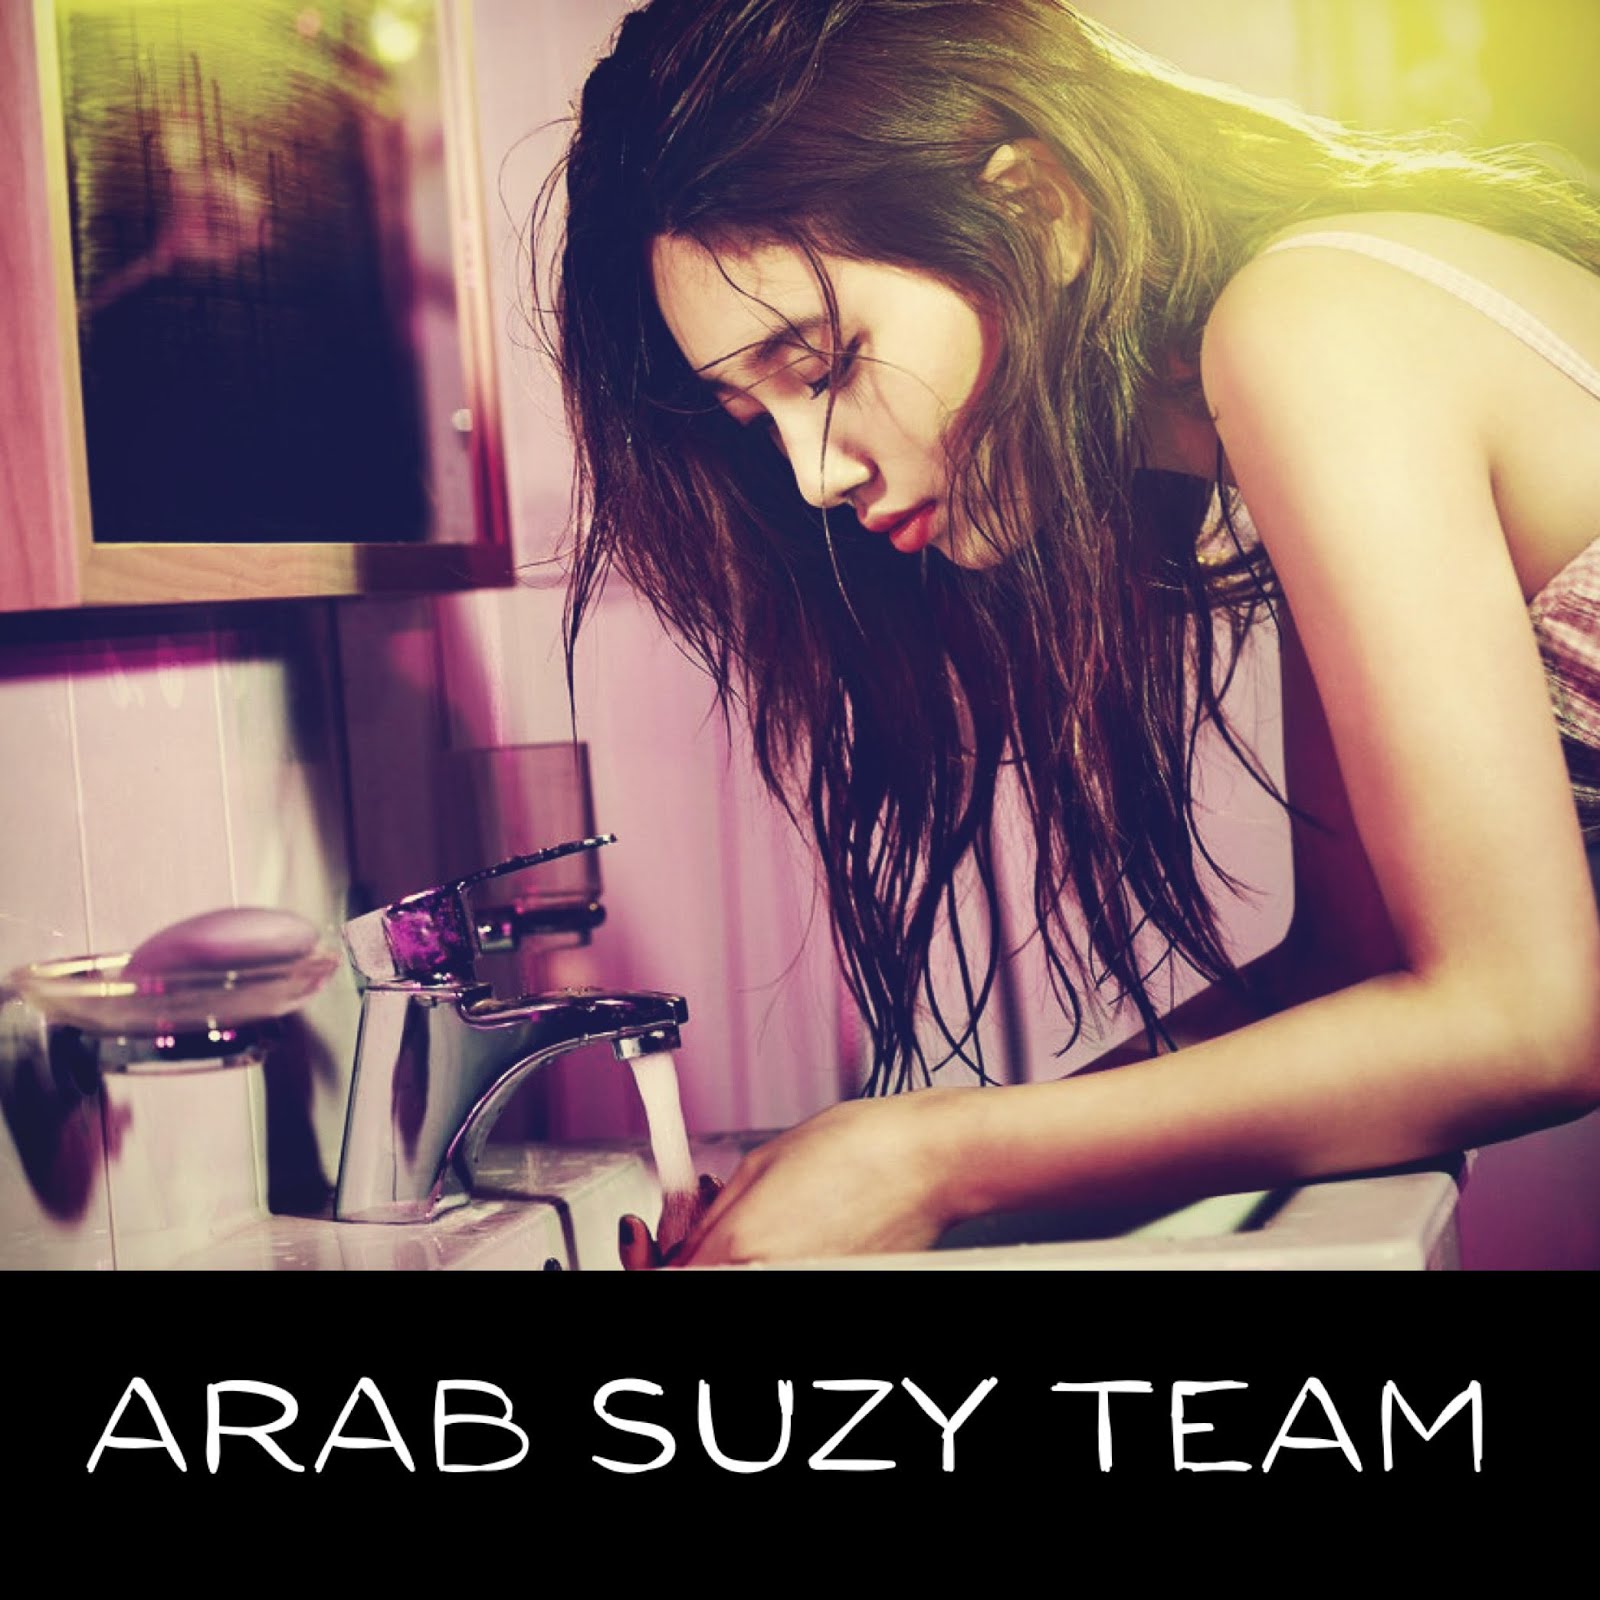 Arab suzy team